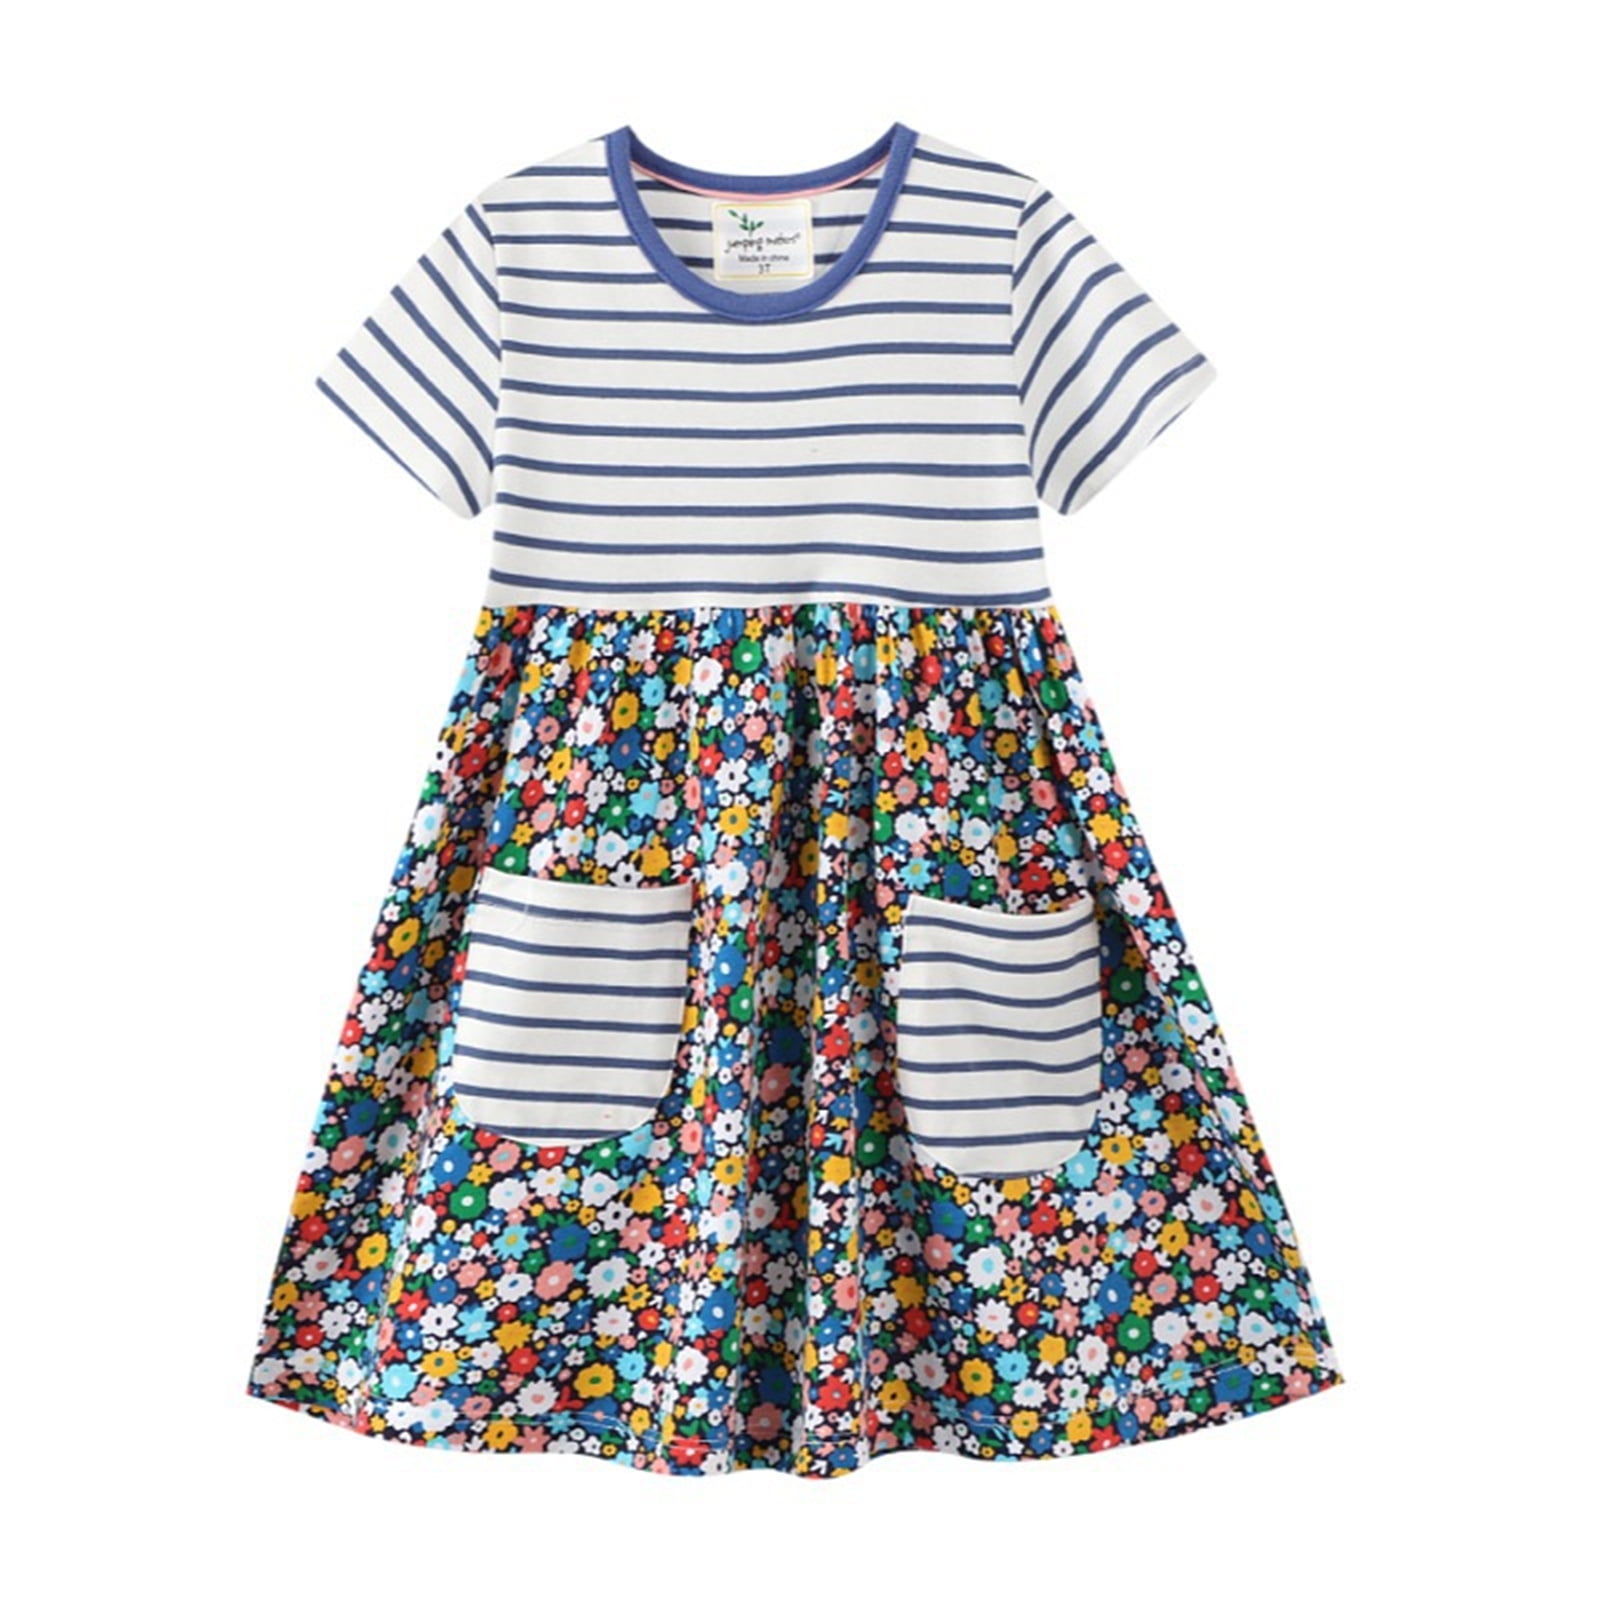 Little Girls Cotton Dress Short Sleeves Casual Summer Floral Basic ...